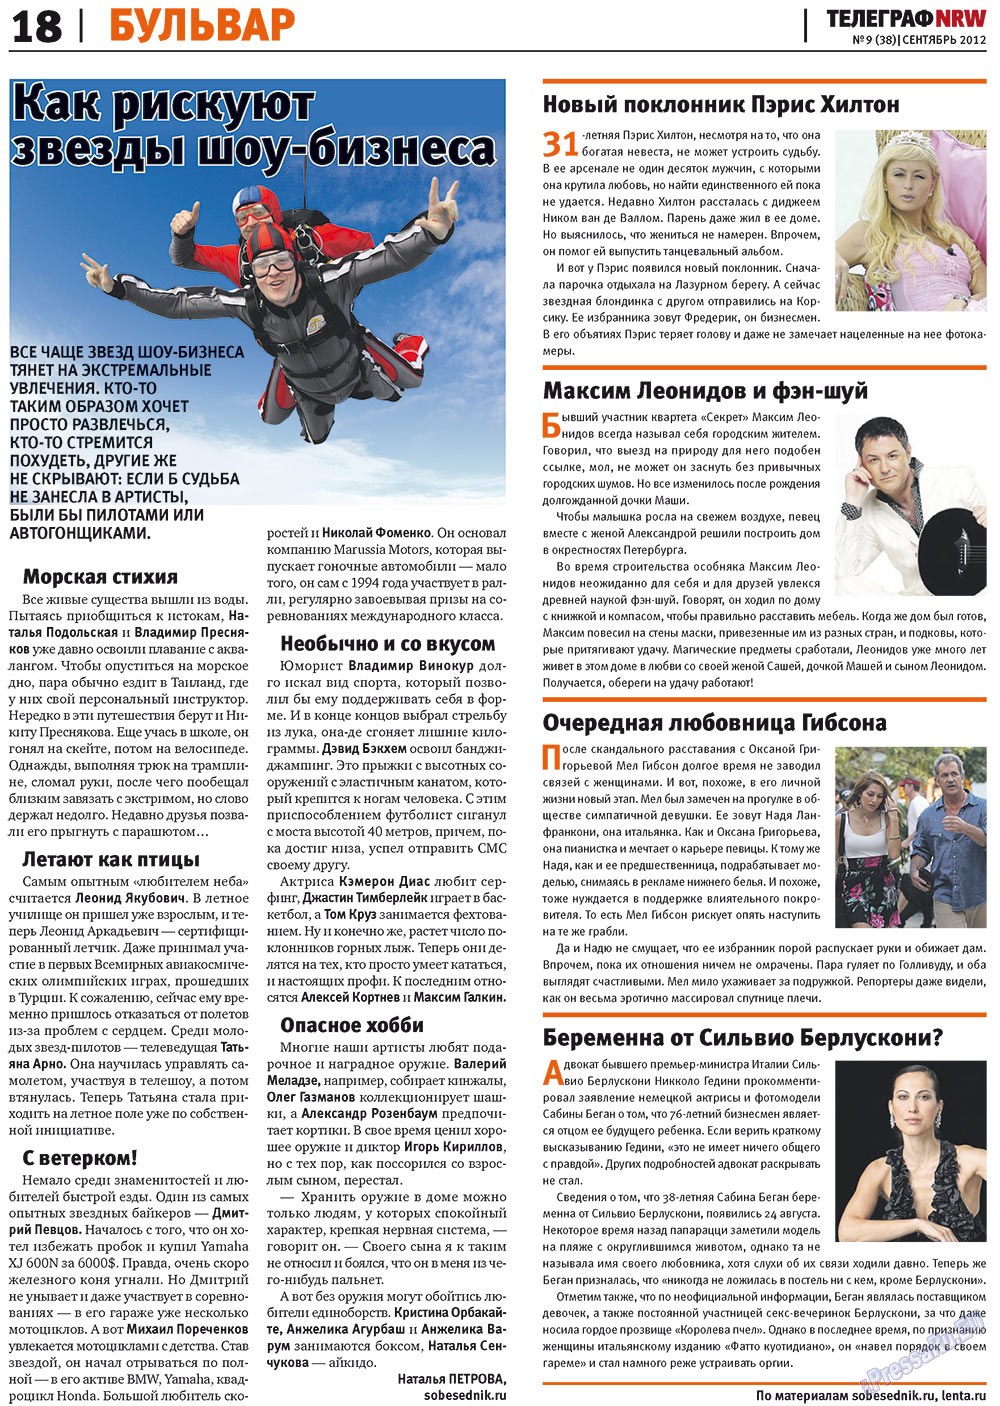 Телеграф NRW, газета. 2012 №9 стр.18